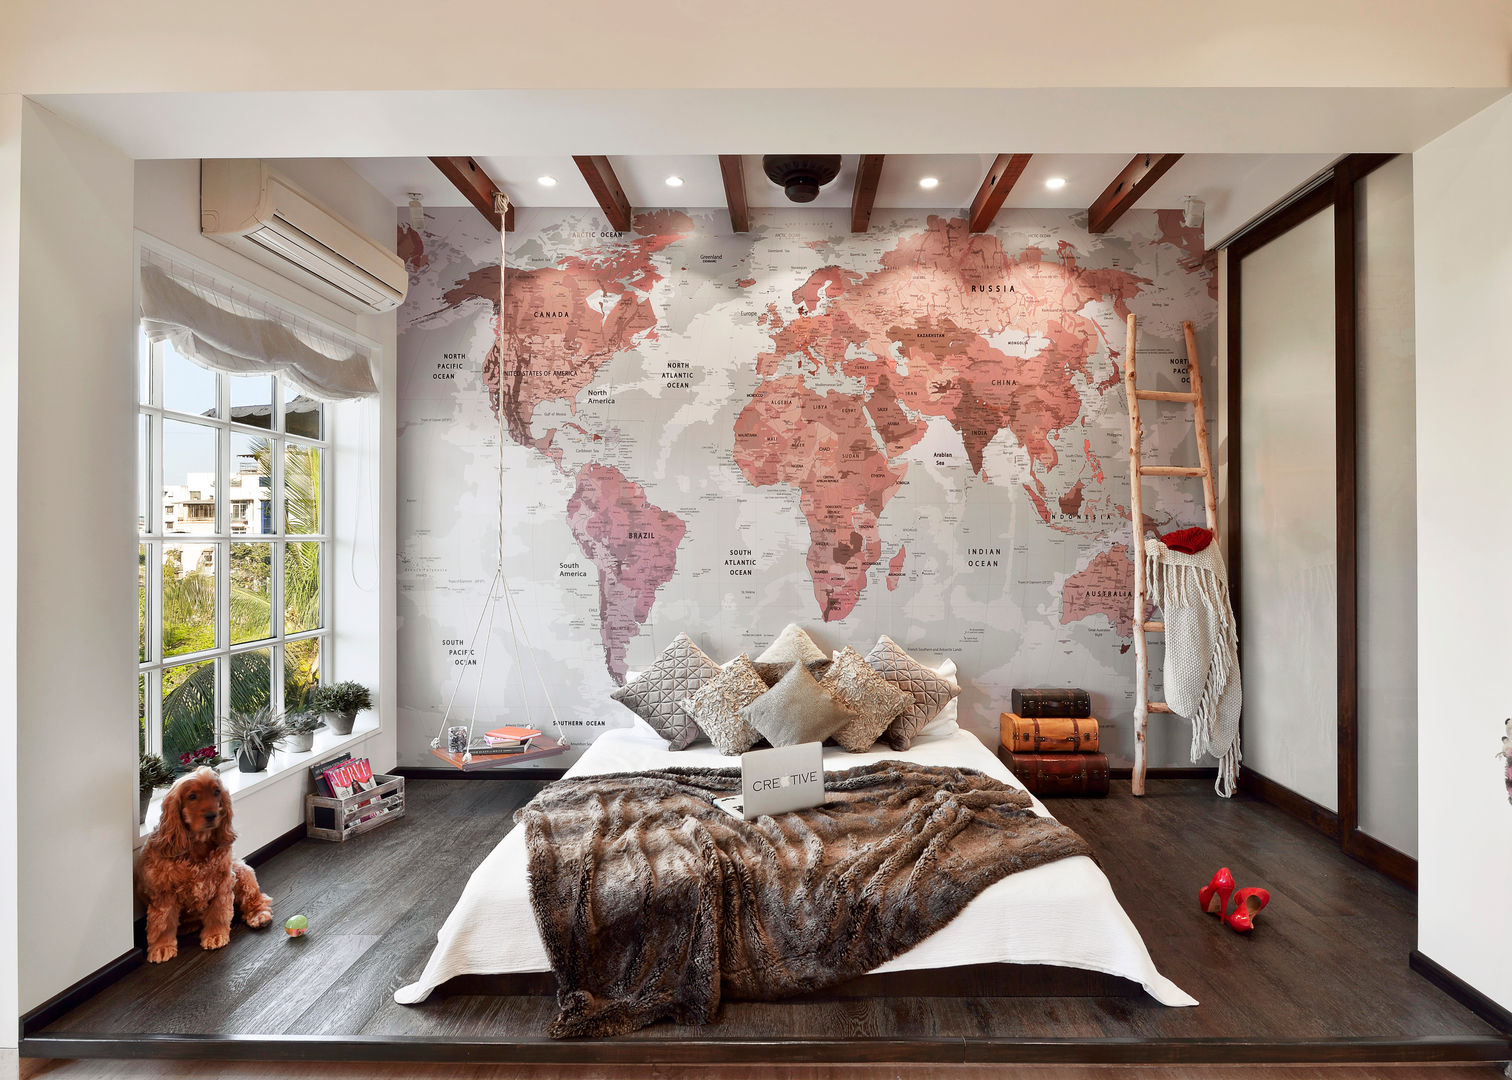 The bed SAGA Design Bedroom ٹھوس لکڑی Multicolored